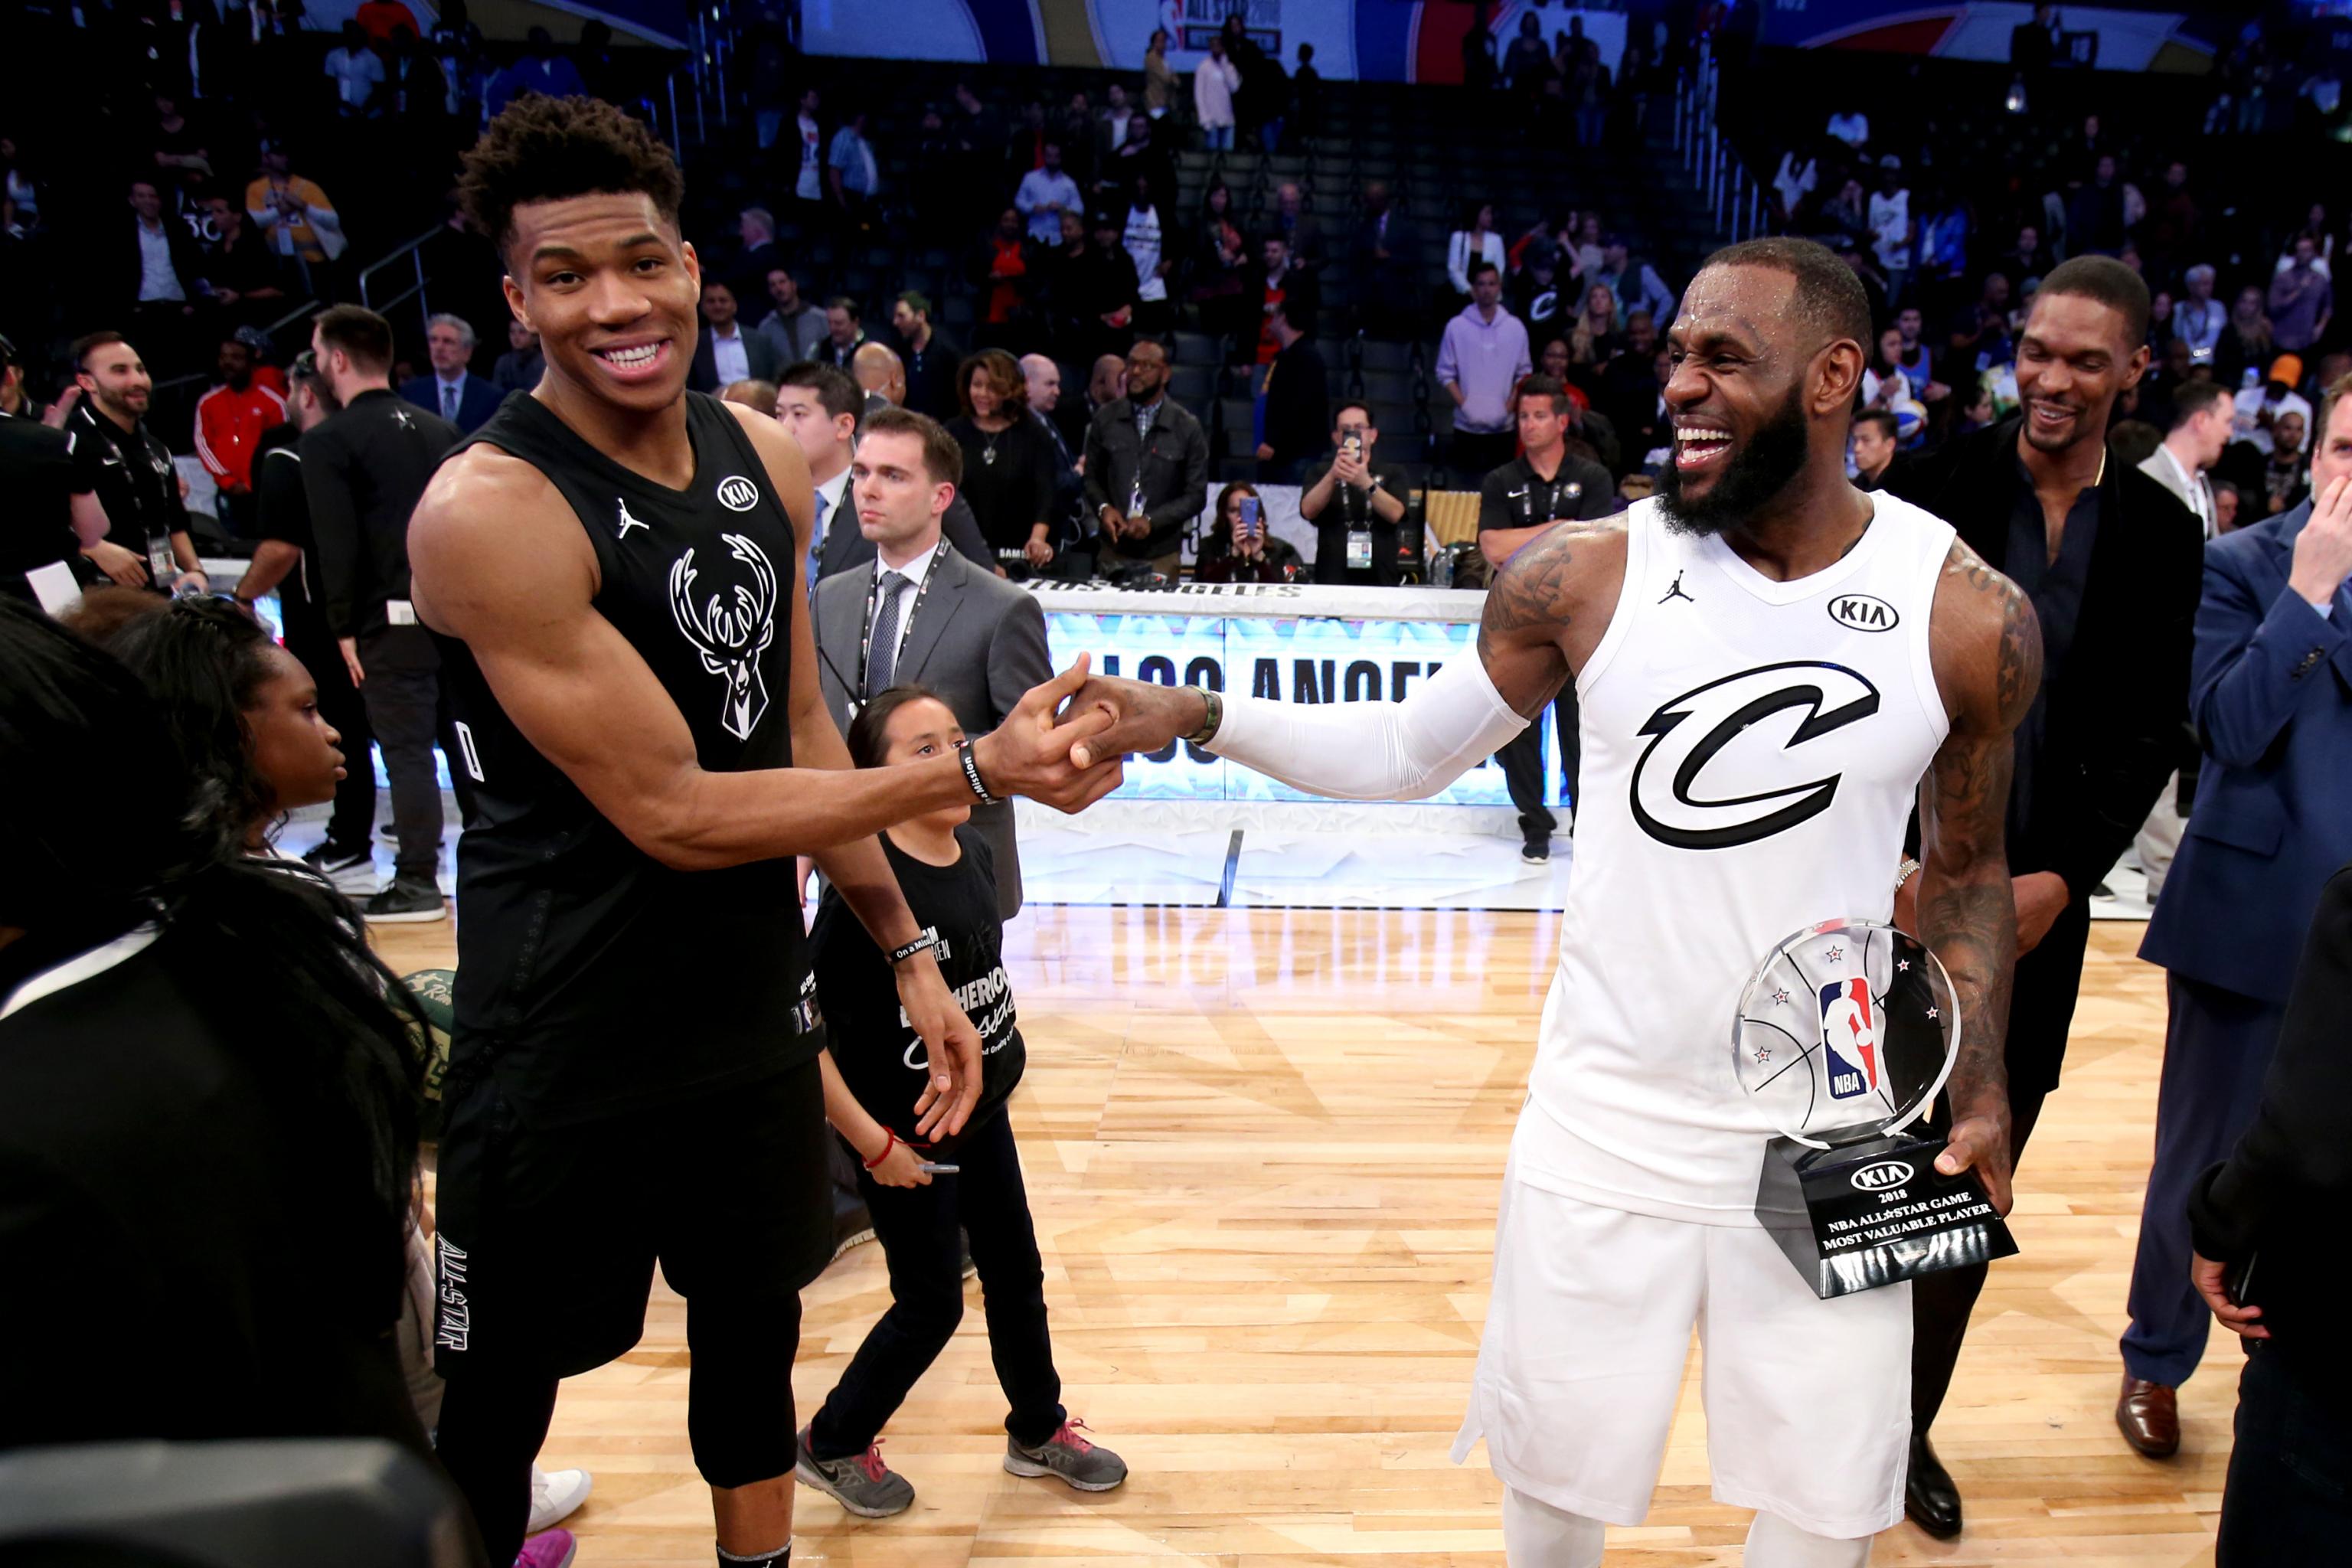 NBA All-Star Game 2019 results, highlights: Team LeBron beats Team